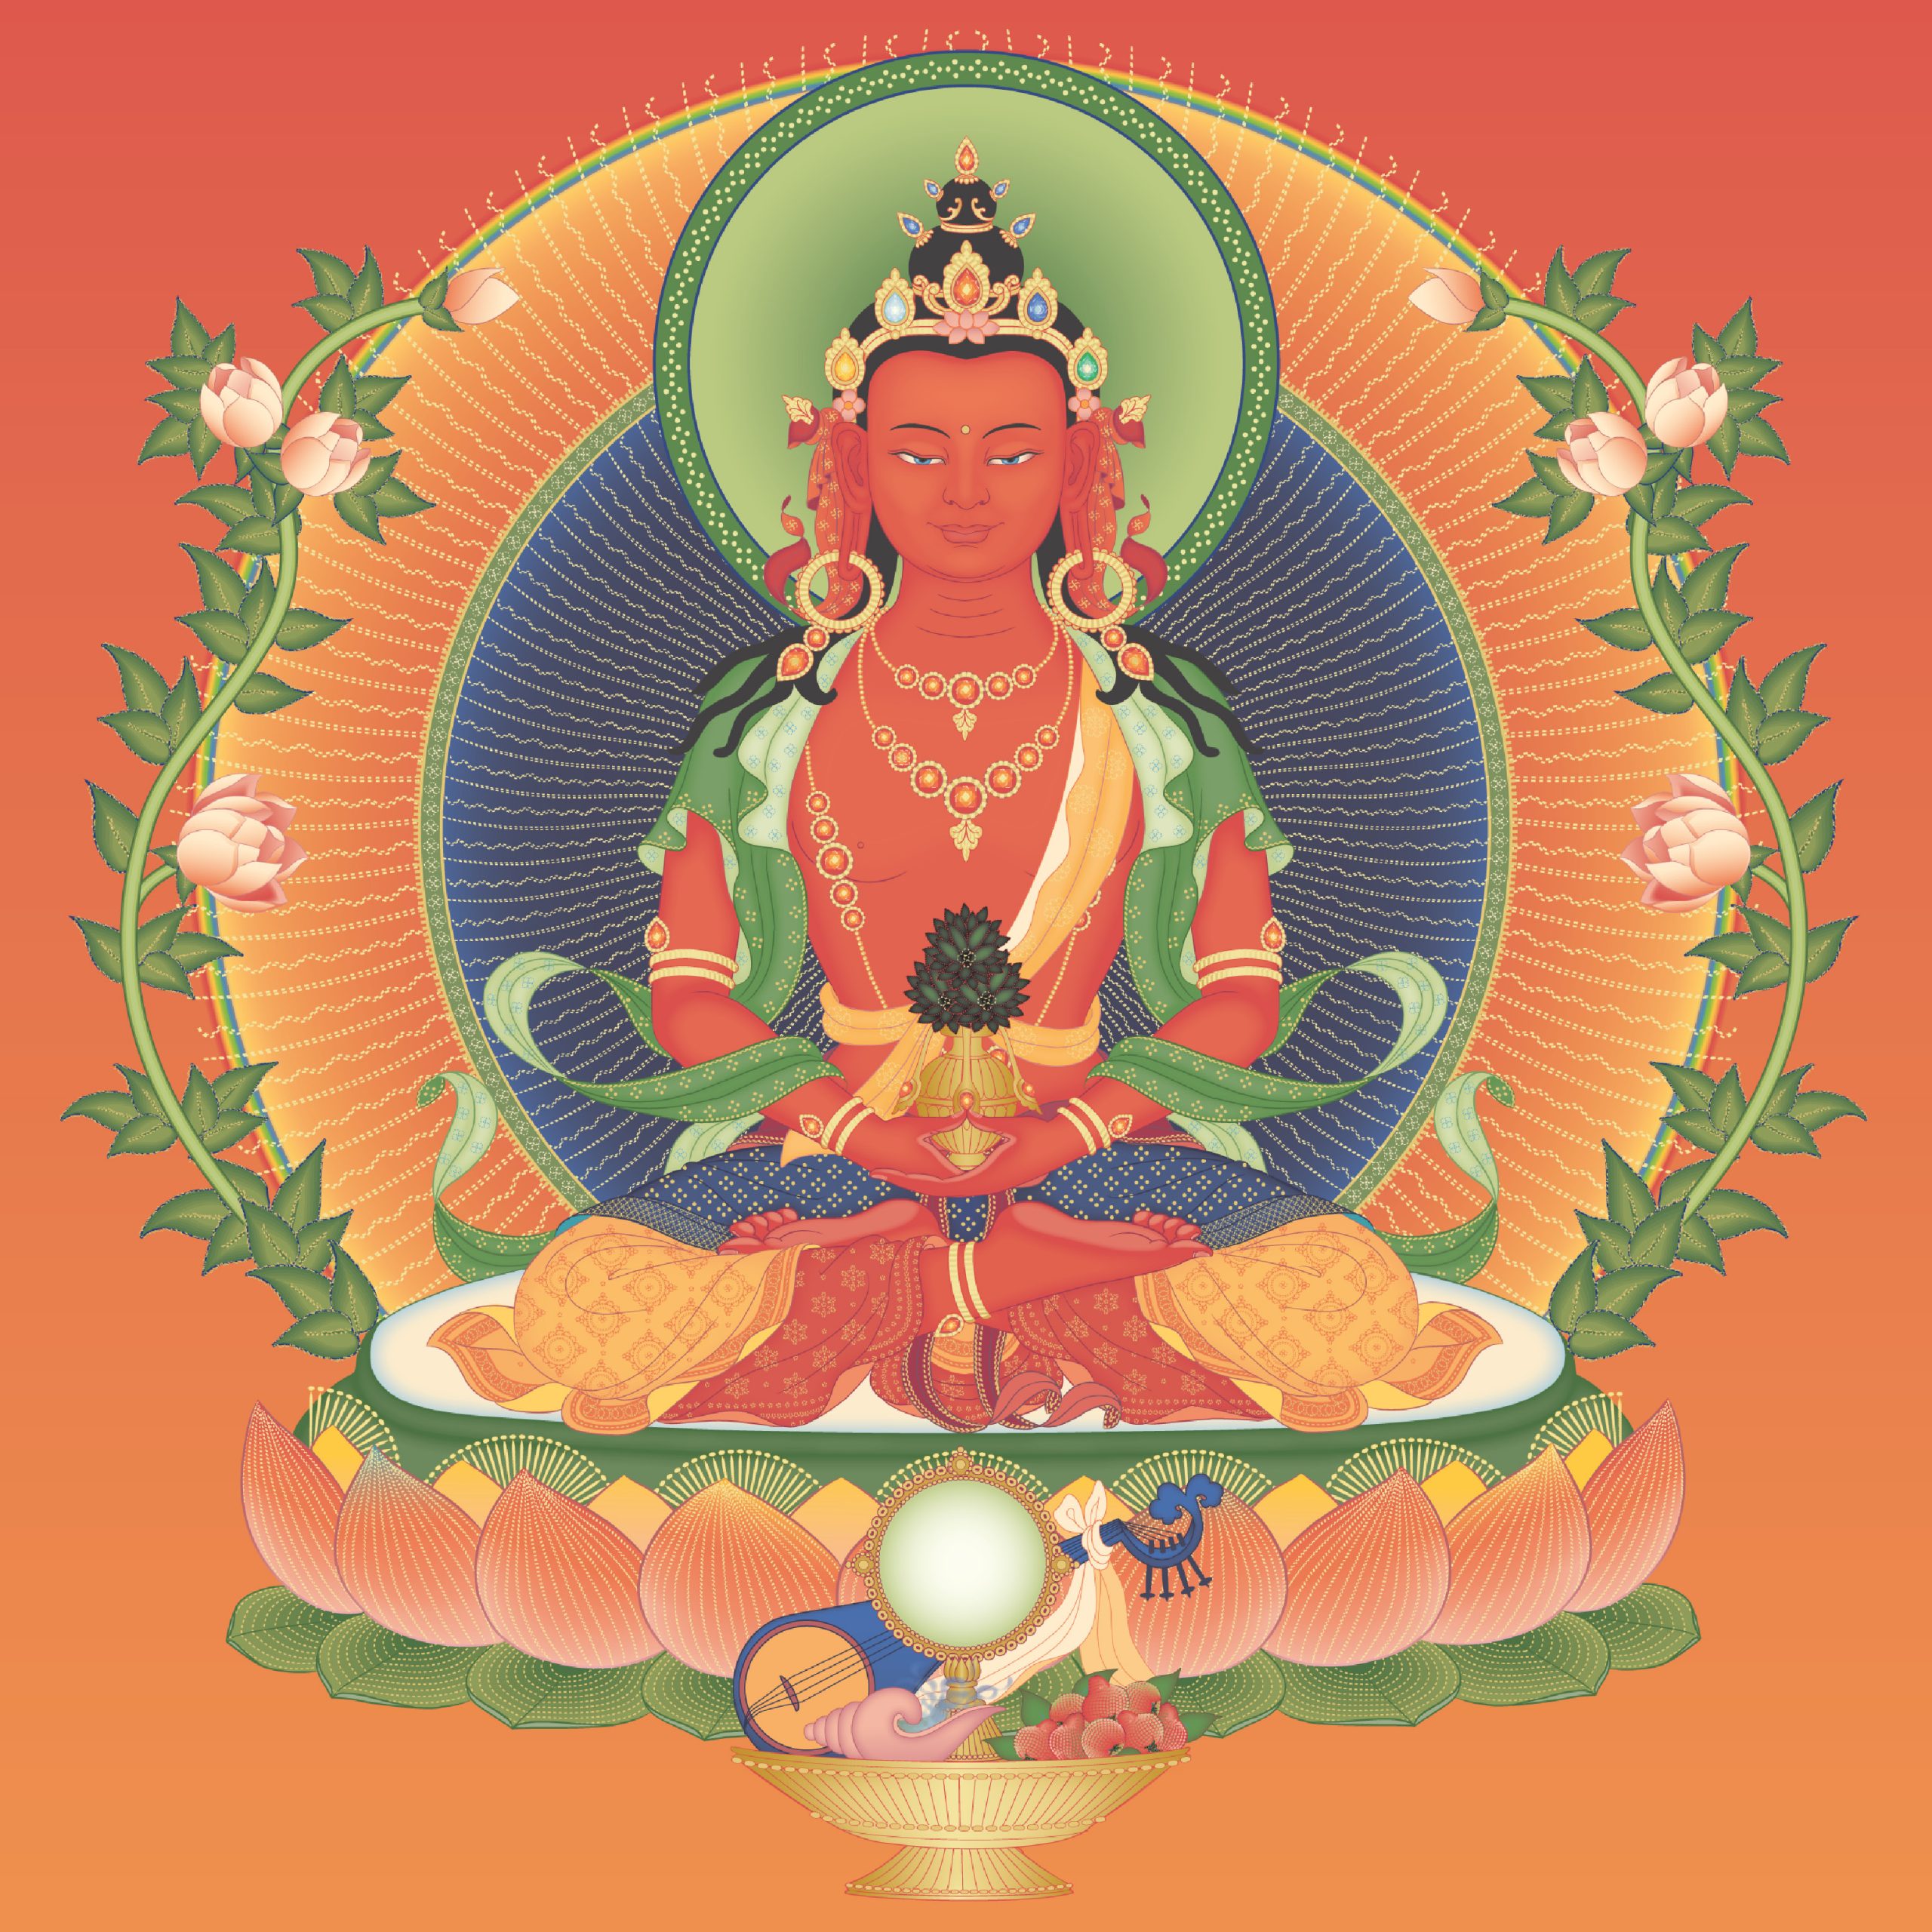 Beautiful Buddha Amitayus image